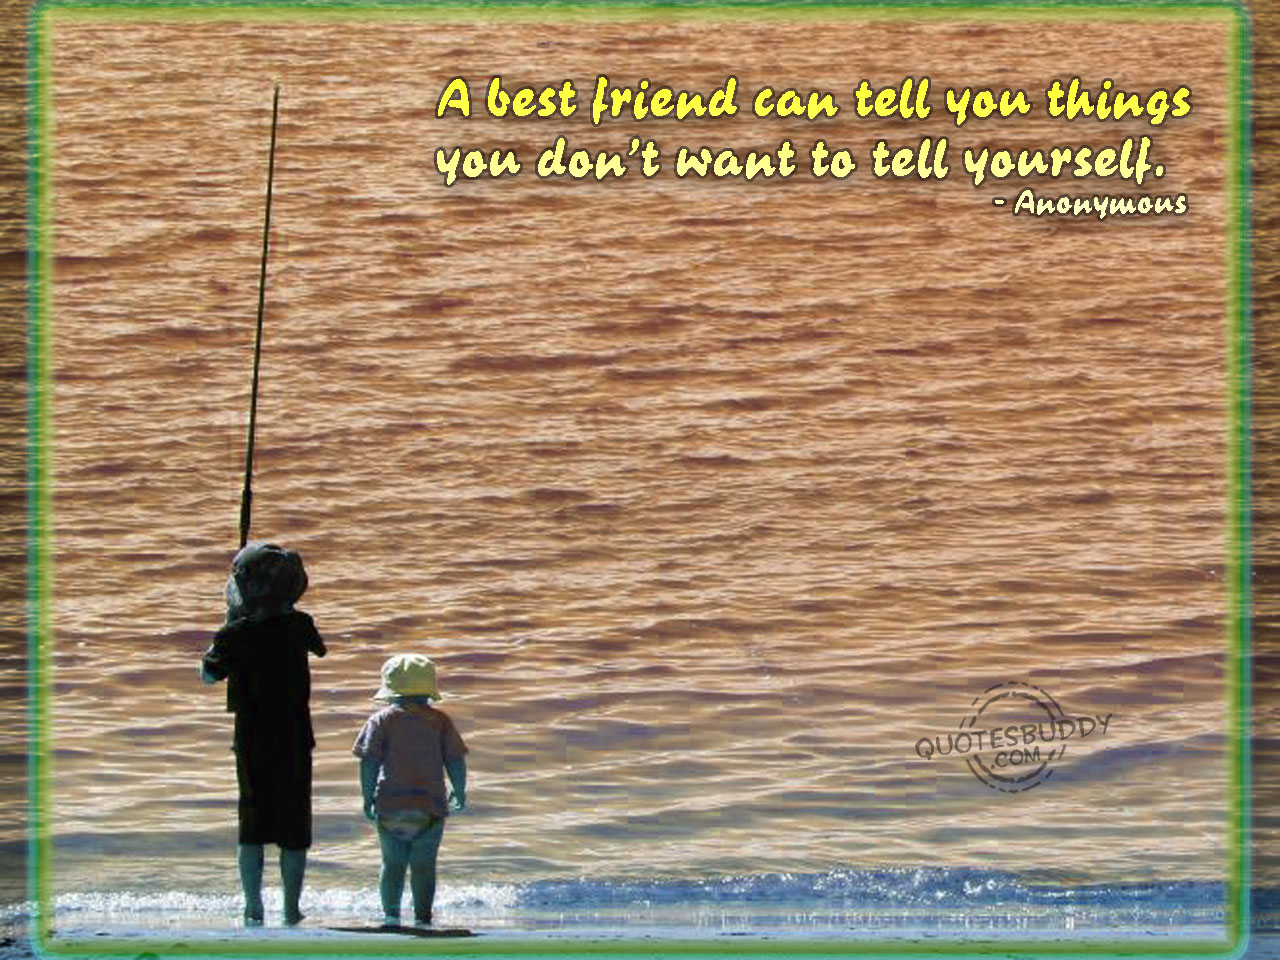 Motivational Wallpaper on Friendship: A best friend can tell you ...